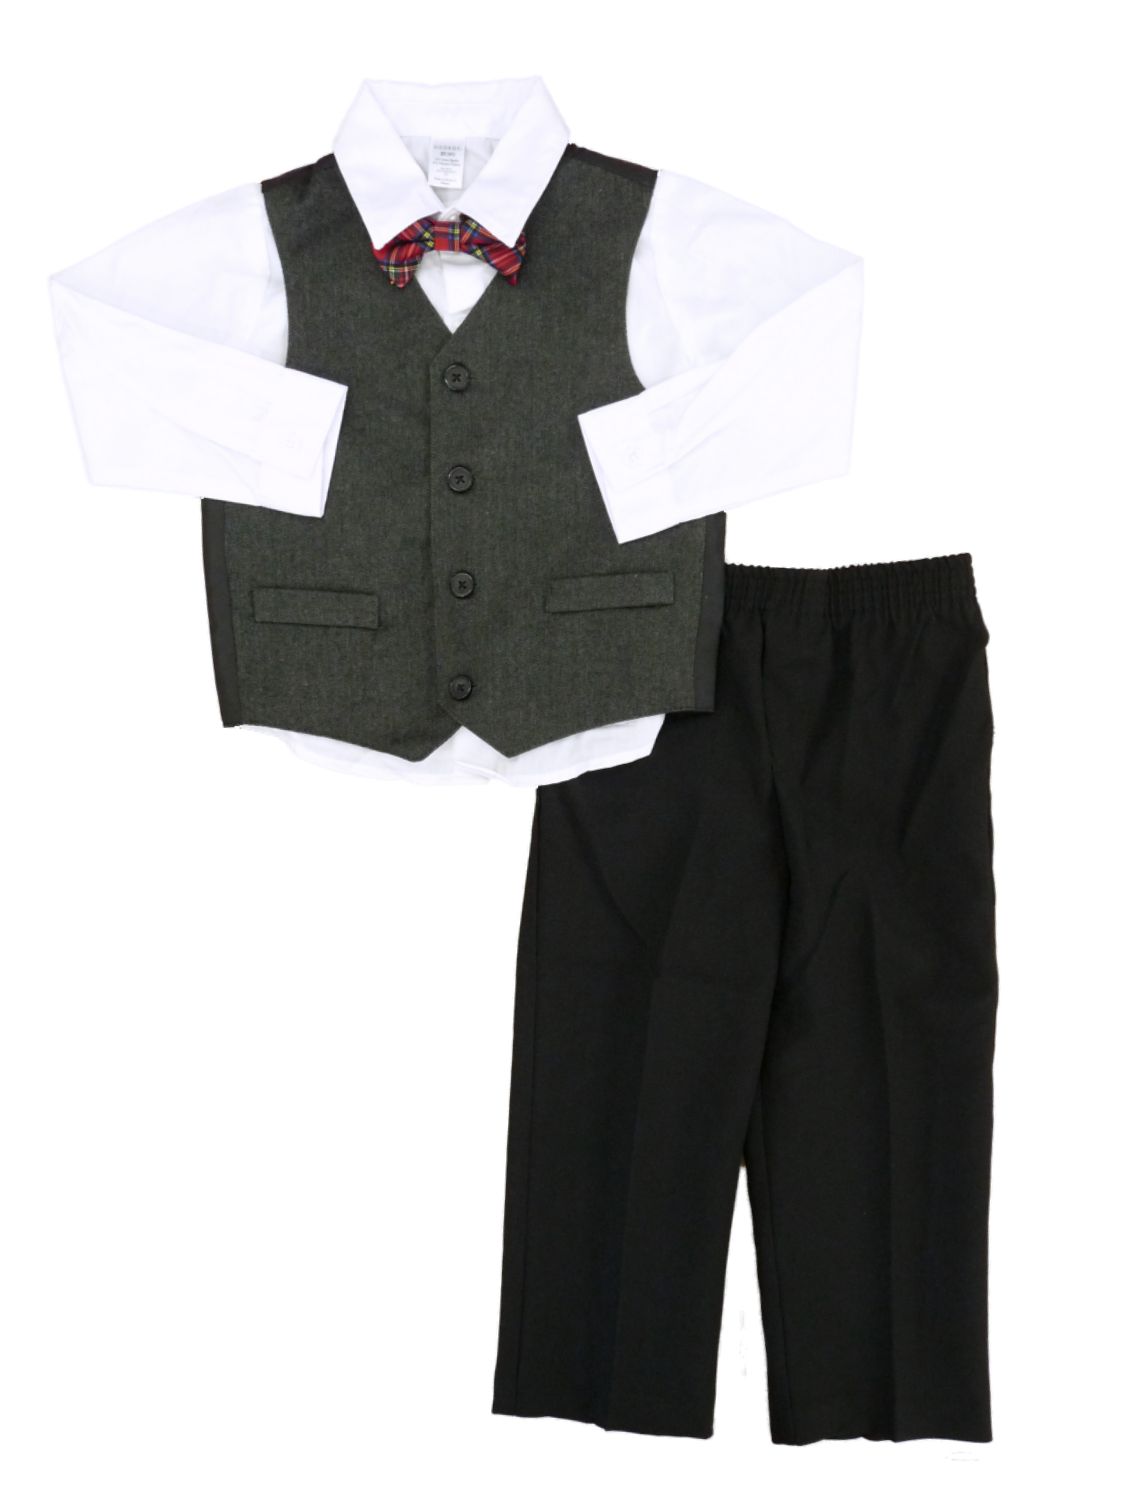 George Infant Toddler Boys White Shirt Vest Bowtie Pants 4P Dress Up Outfit